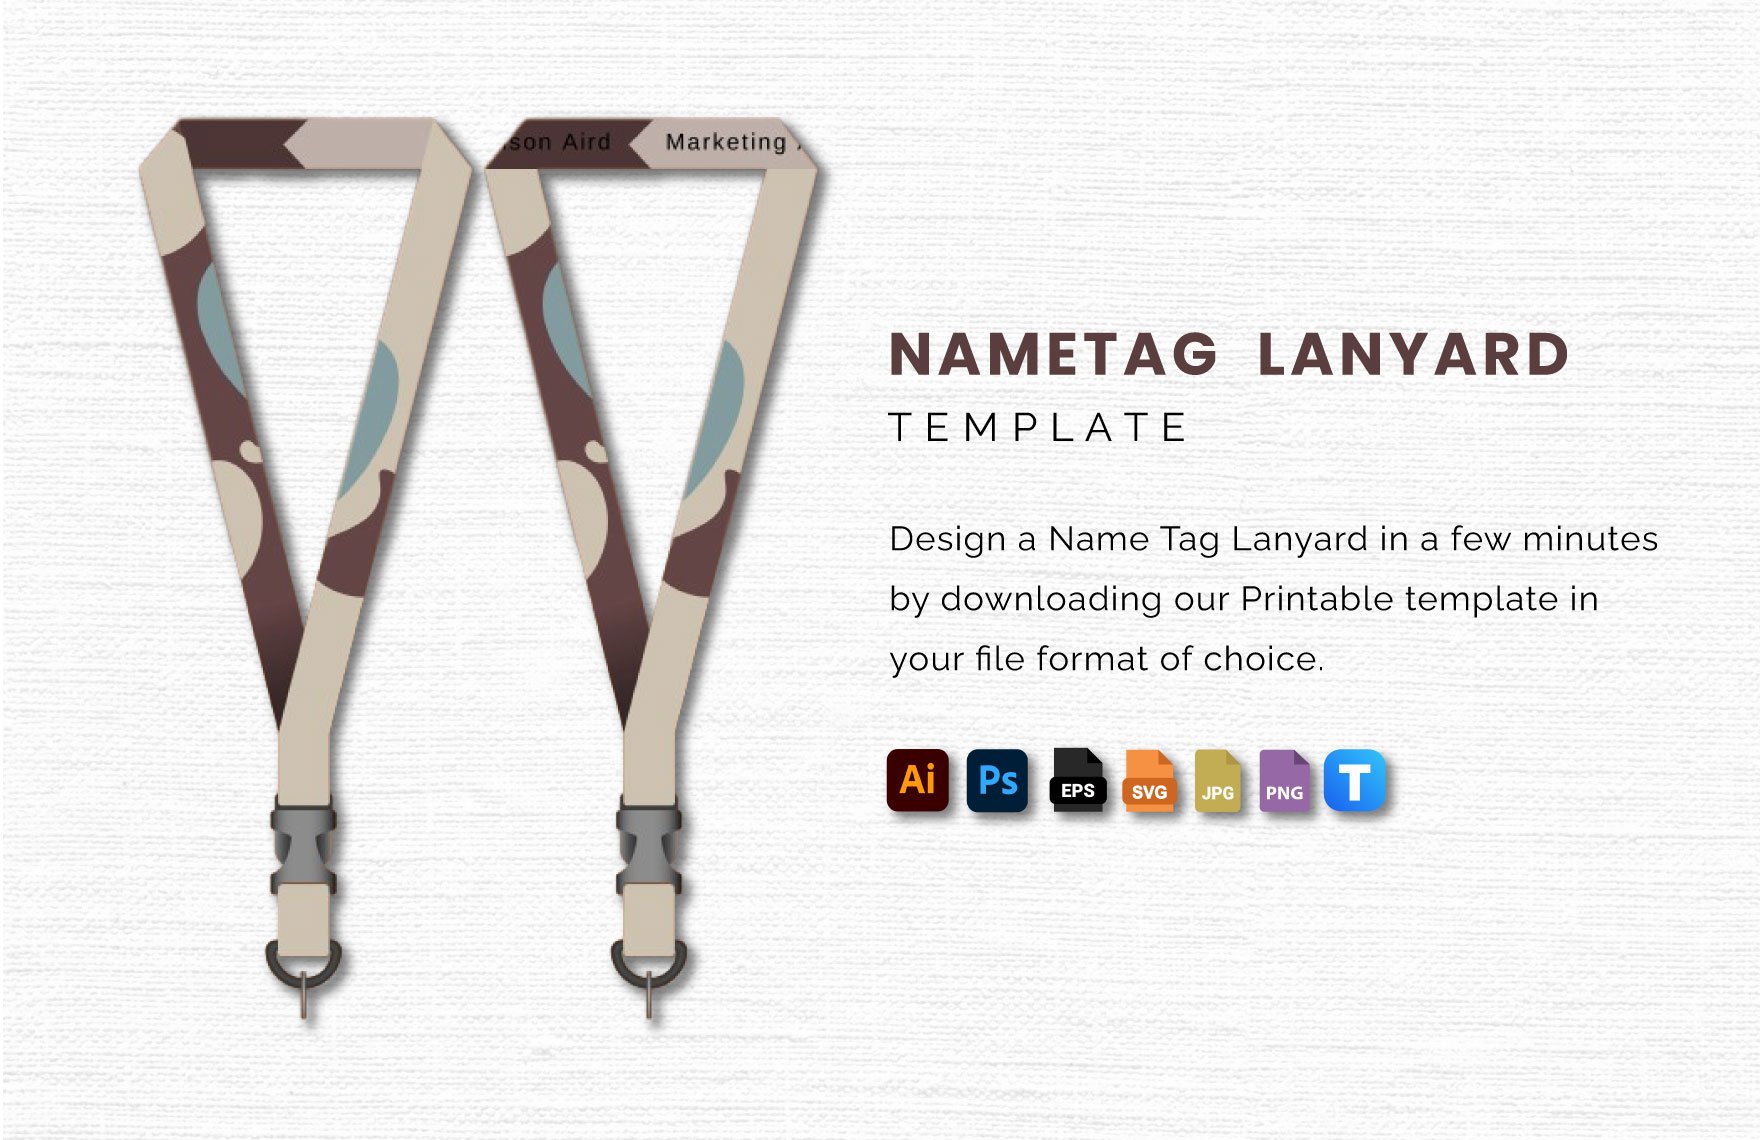 Name Tag Lanyard Template in Illustrator, PSD, EPS, SVG, JPG, PNG